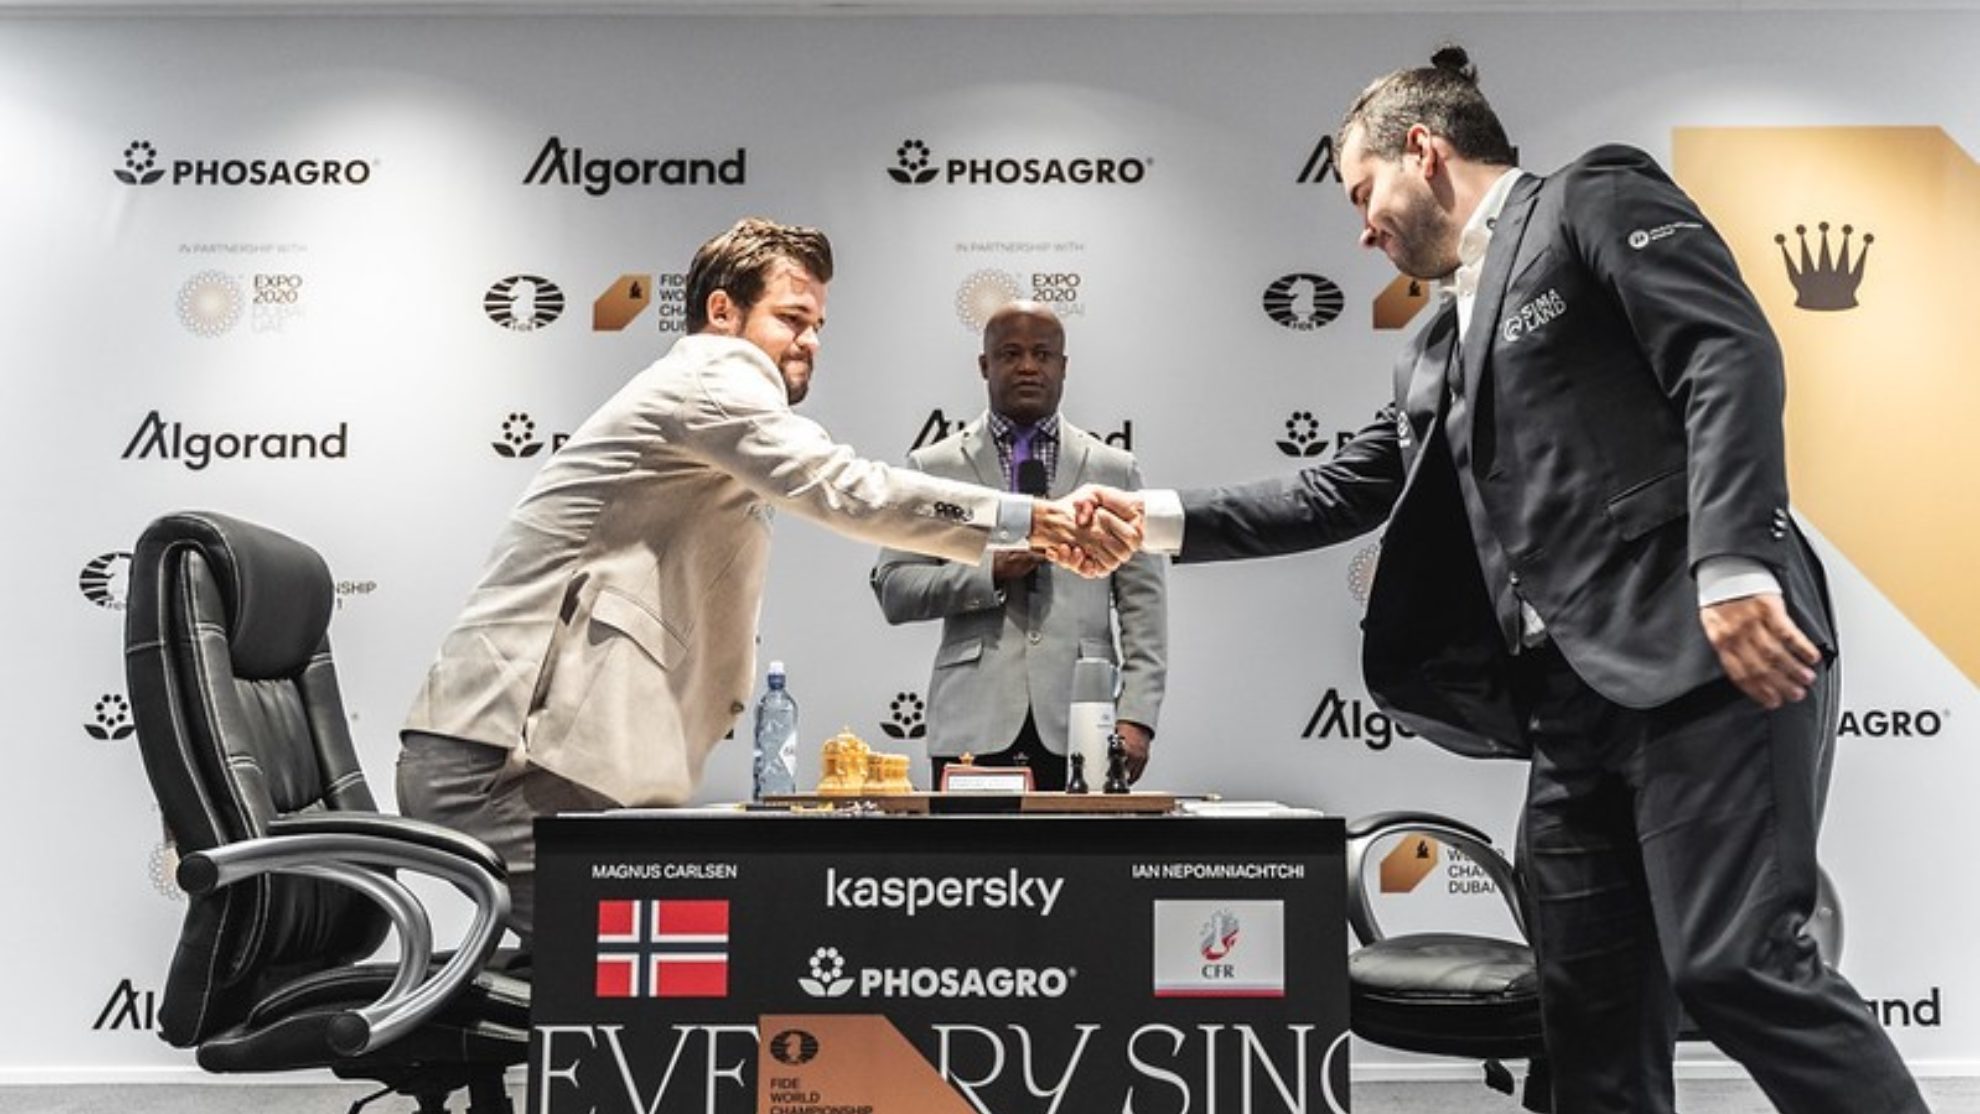 Magnus Carlsen e Ian Nepomniachtchi.